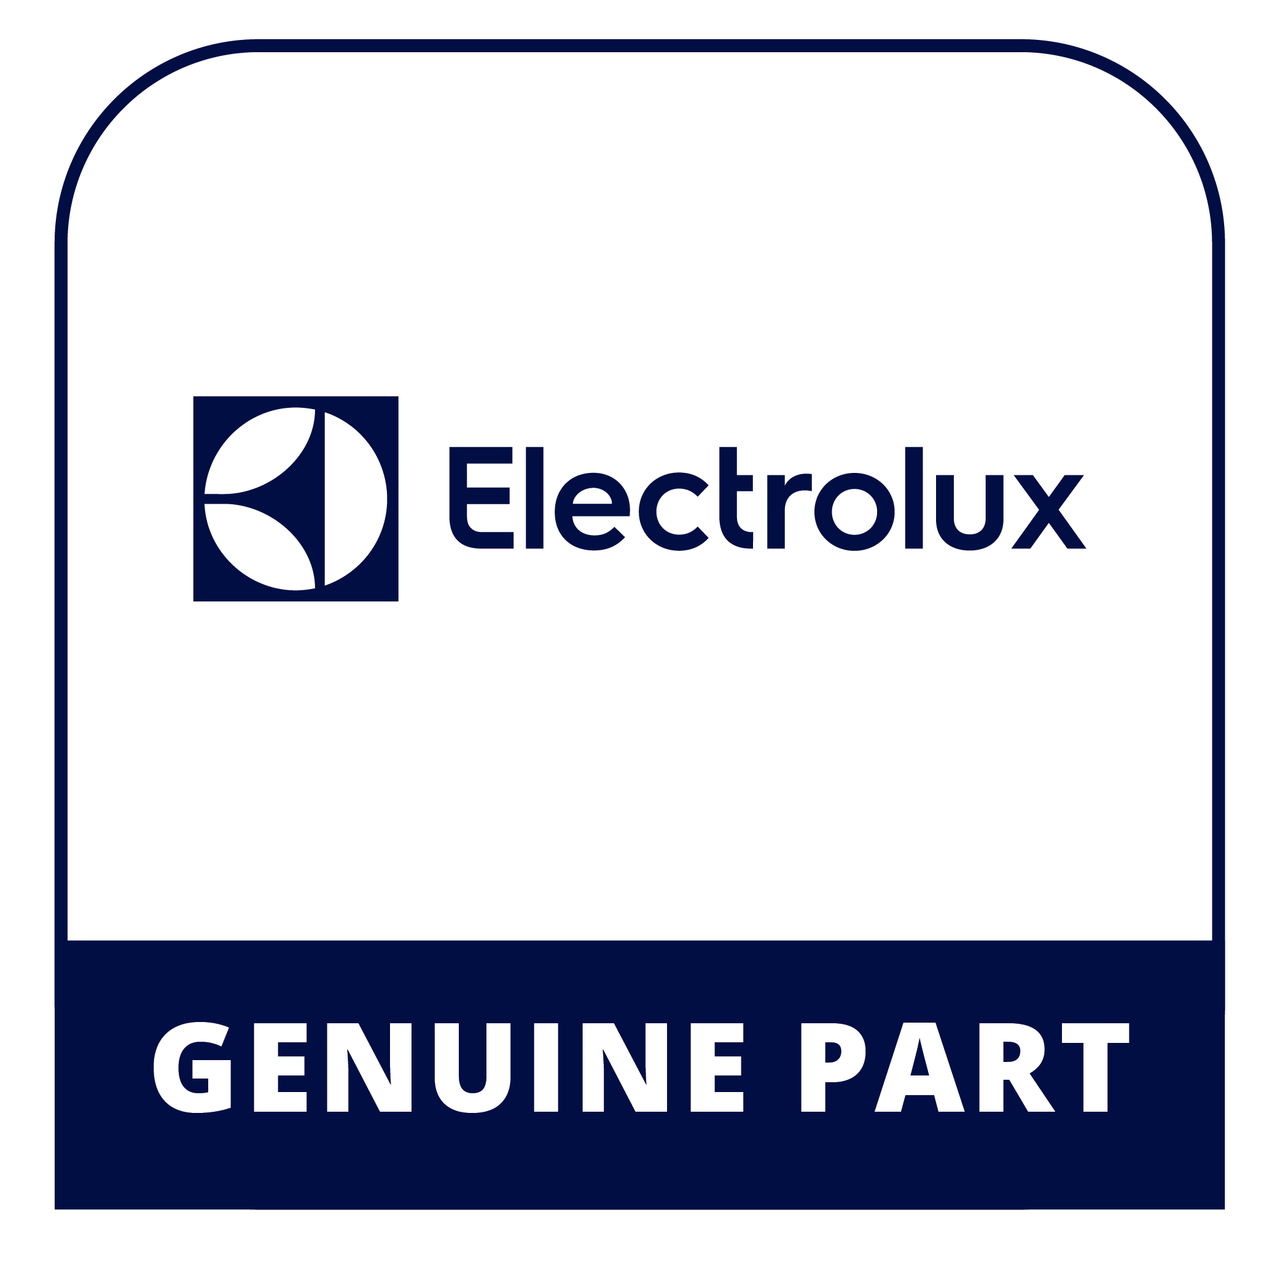 Frigidaire - Electrolux 318335305 Bracket - Genuine Electrolux Part